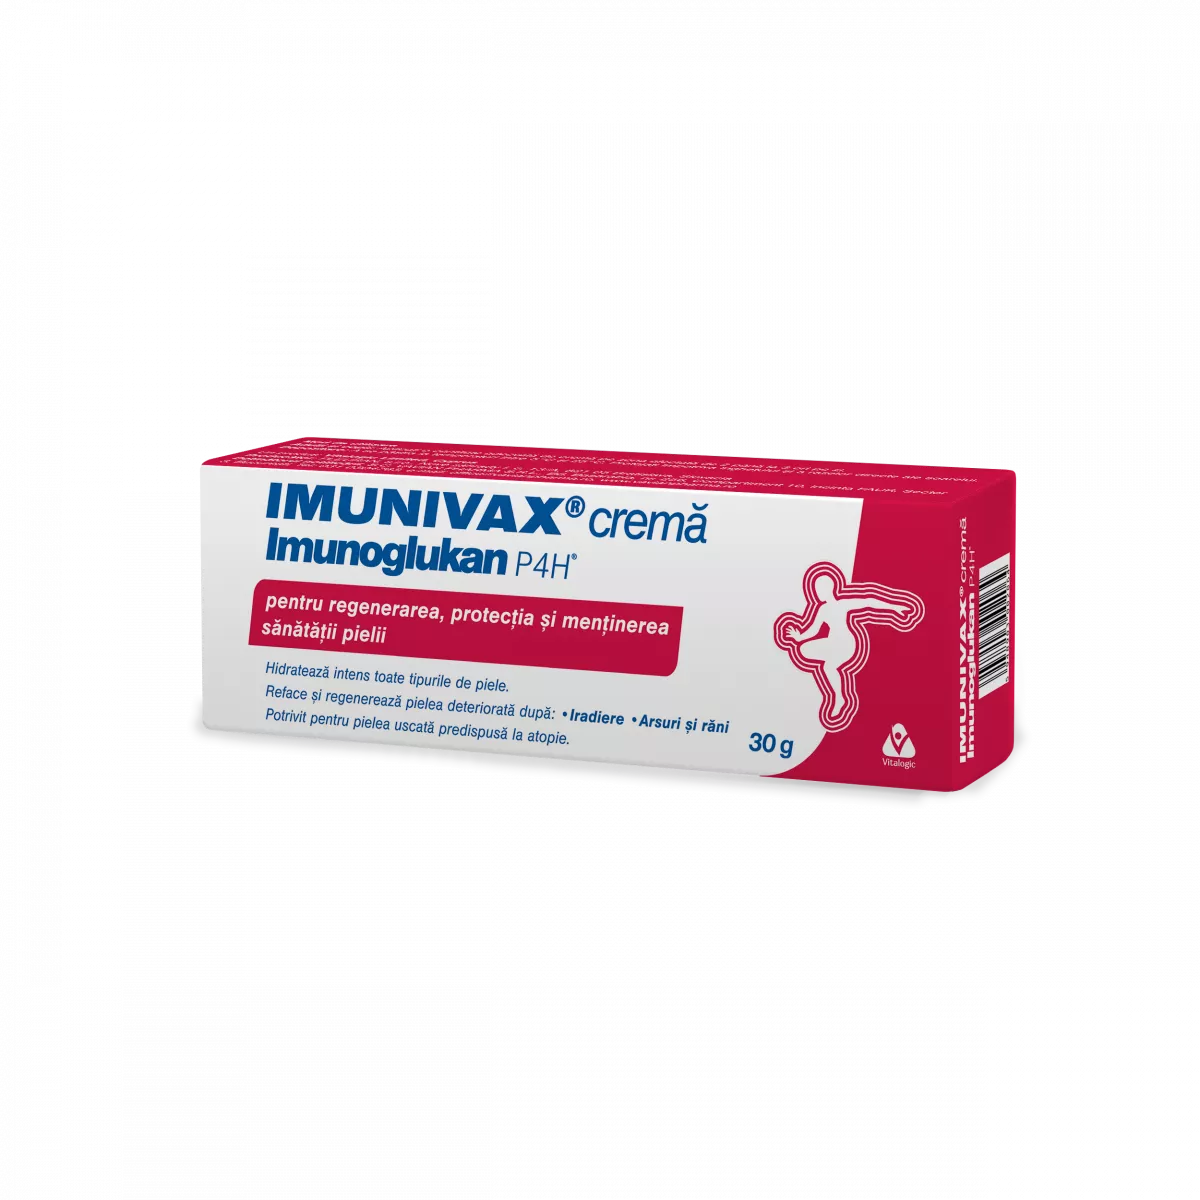 IMUNIVAX Imunoglukan P4H crema, [],nordpharm.ro